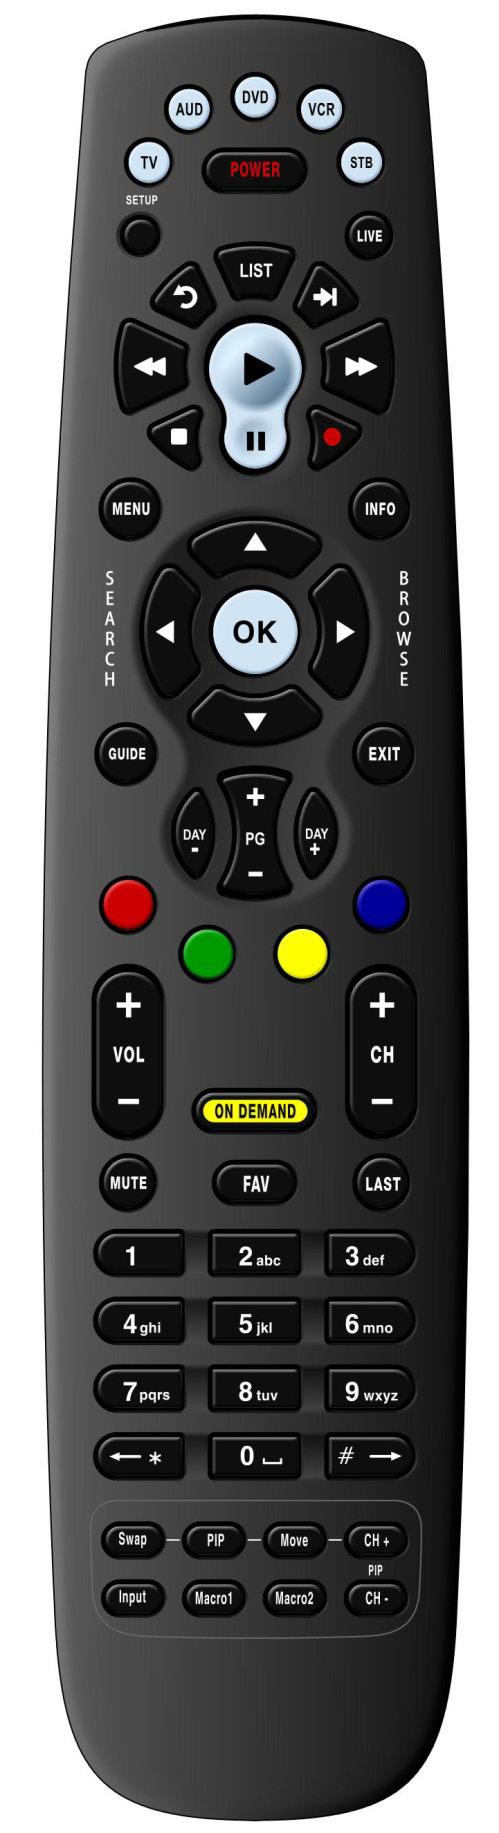 IPTV Middleware Remote Control & DVR User Guide Version 2.